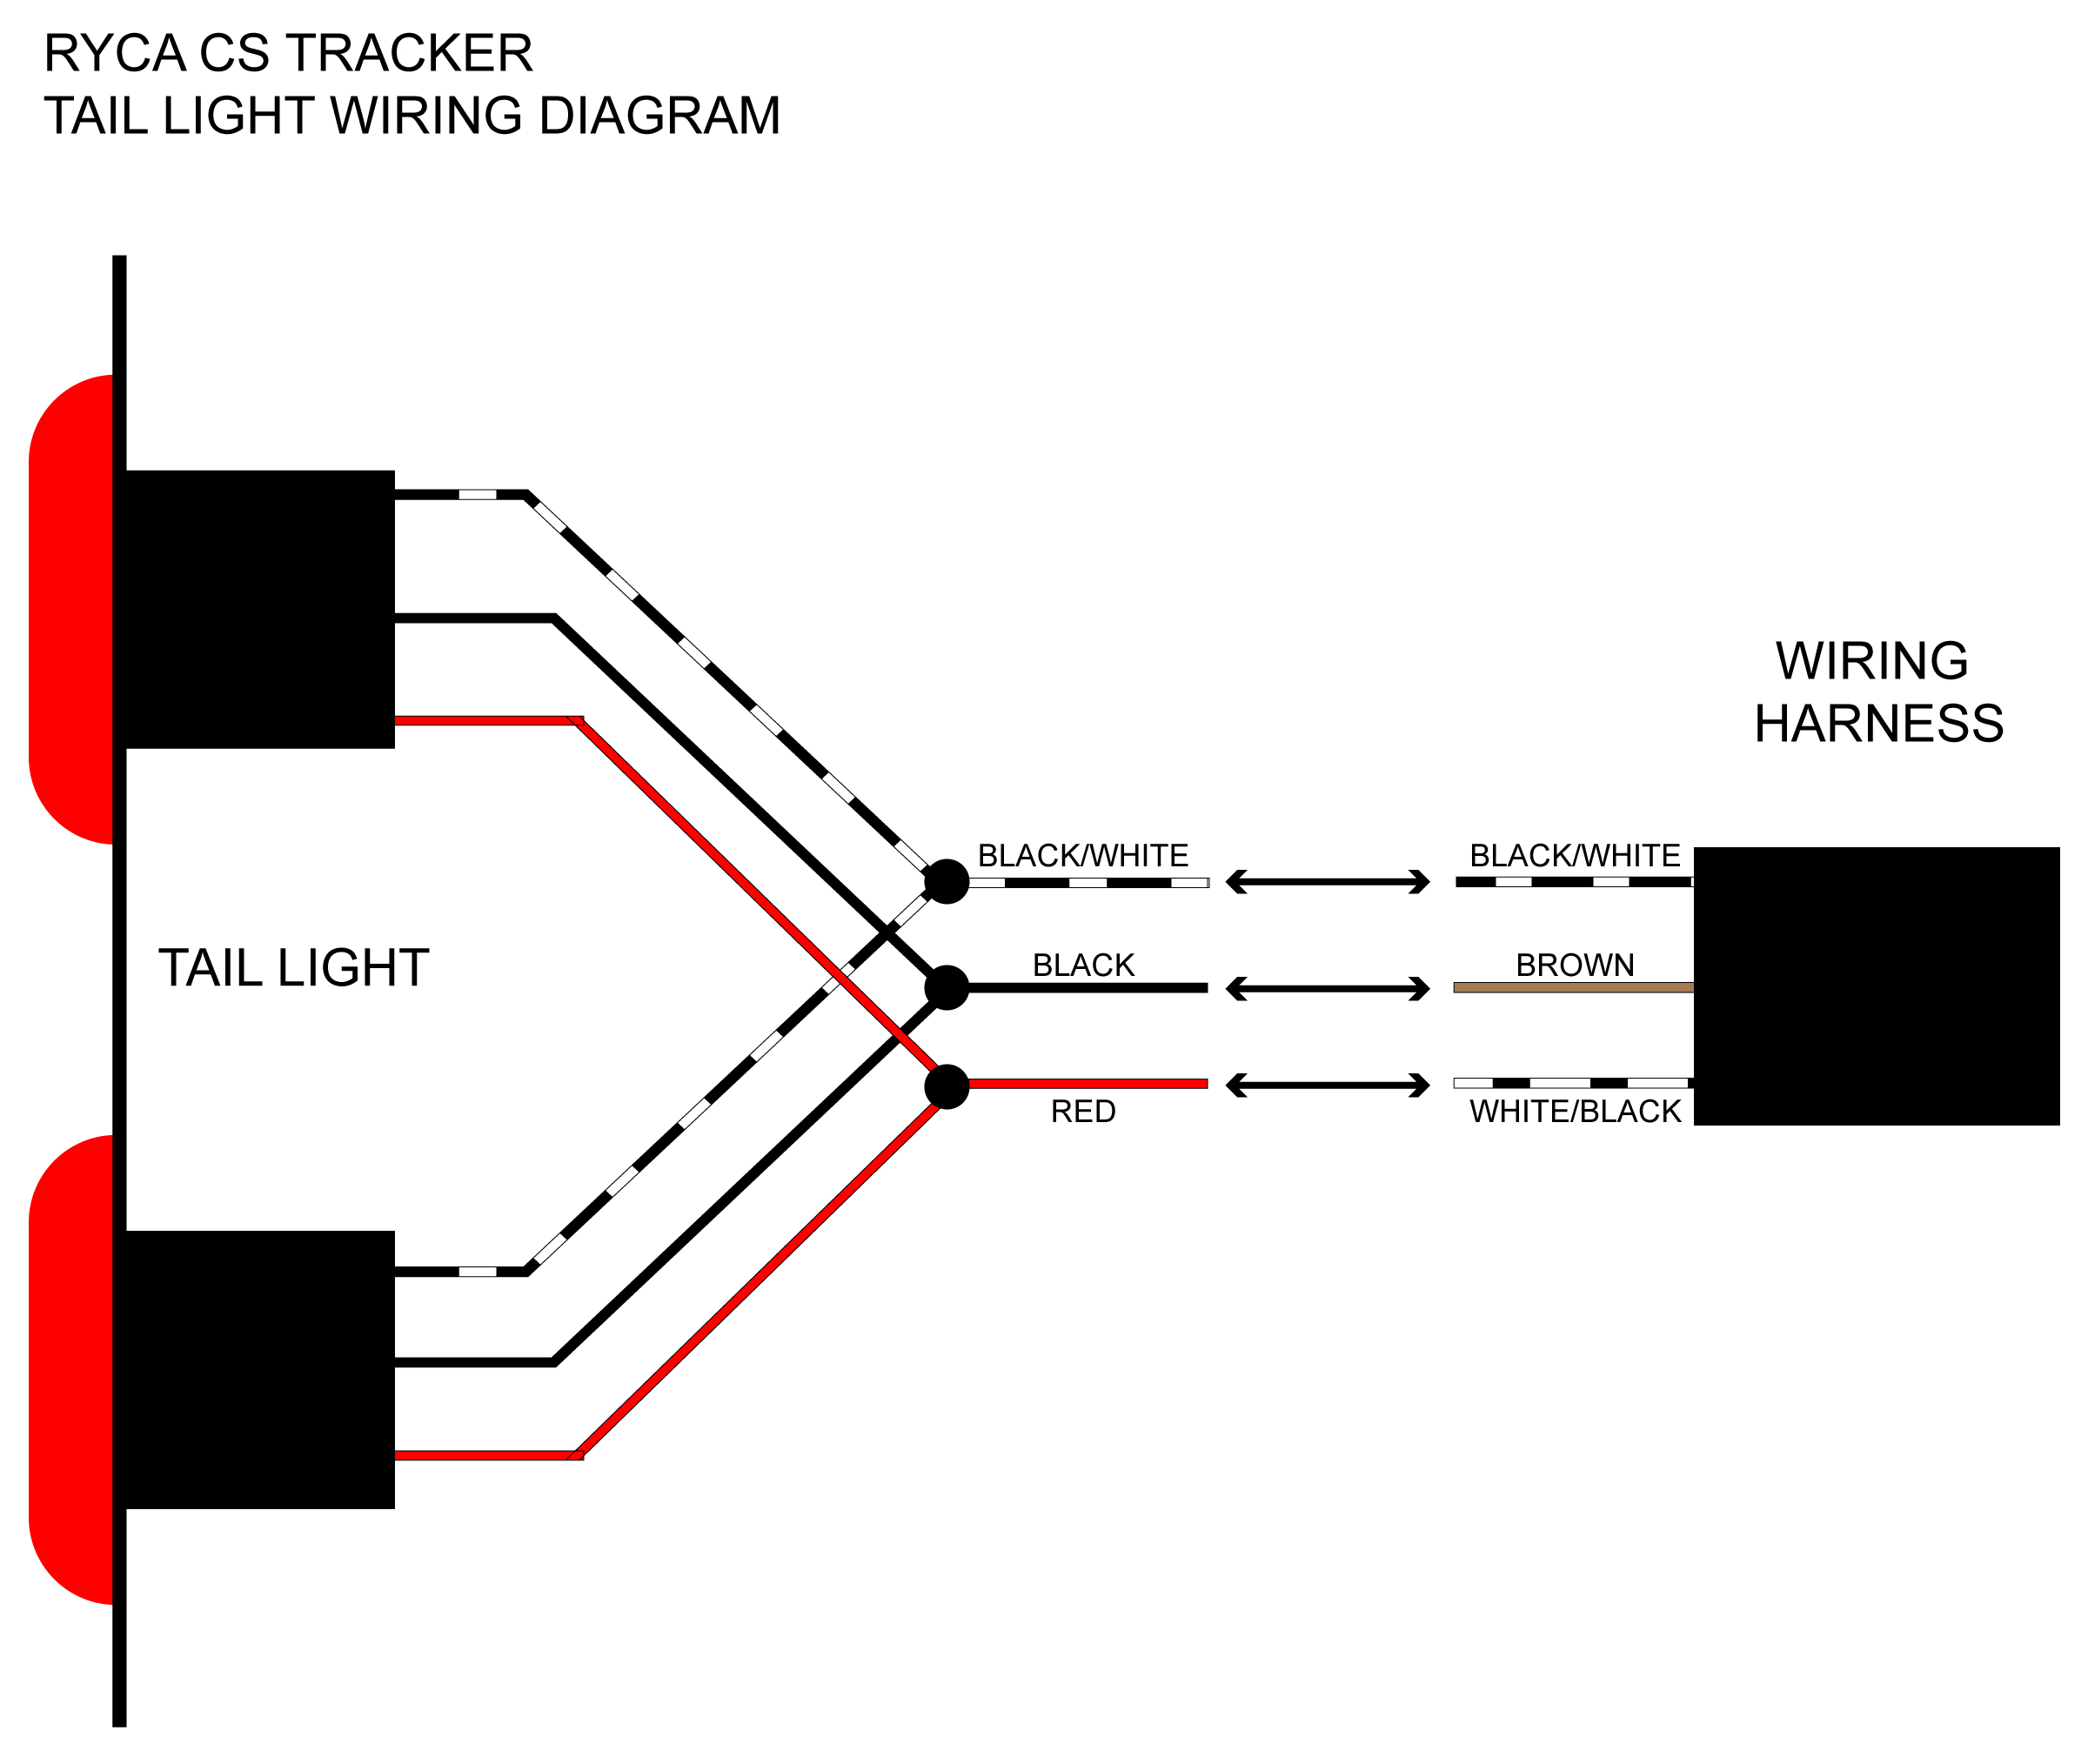 Led Tail Light Wiring Diagram - Wiring Diagrams Thumbs - Tail Light Wiring Diagram